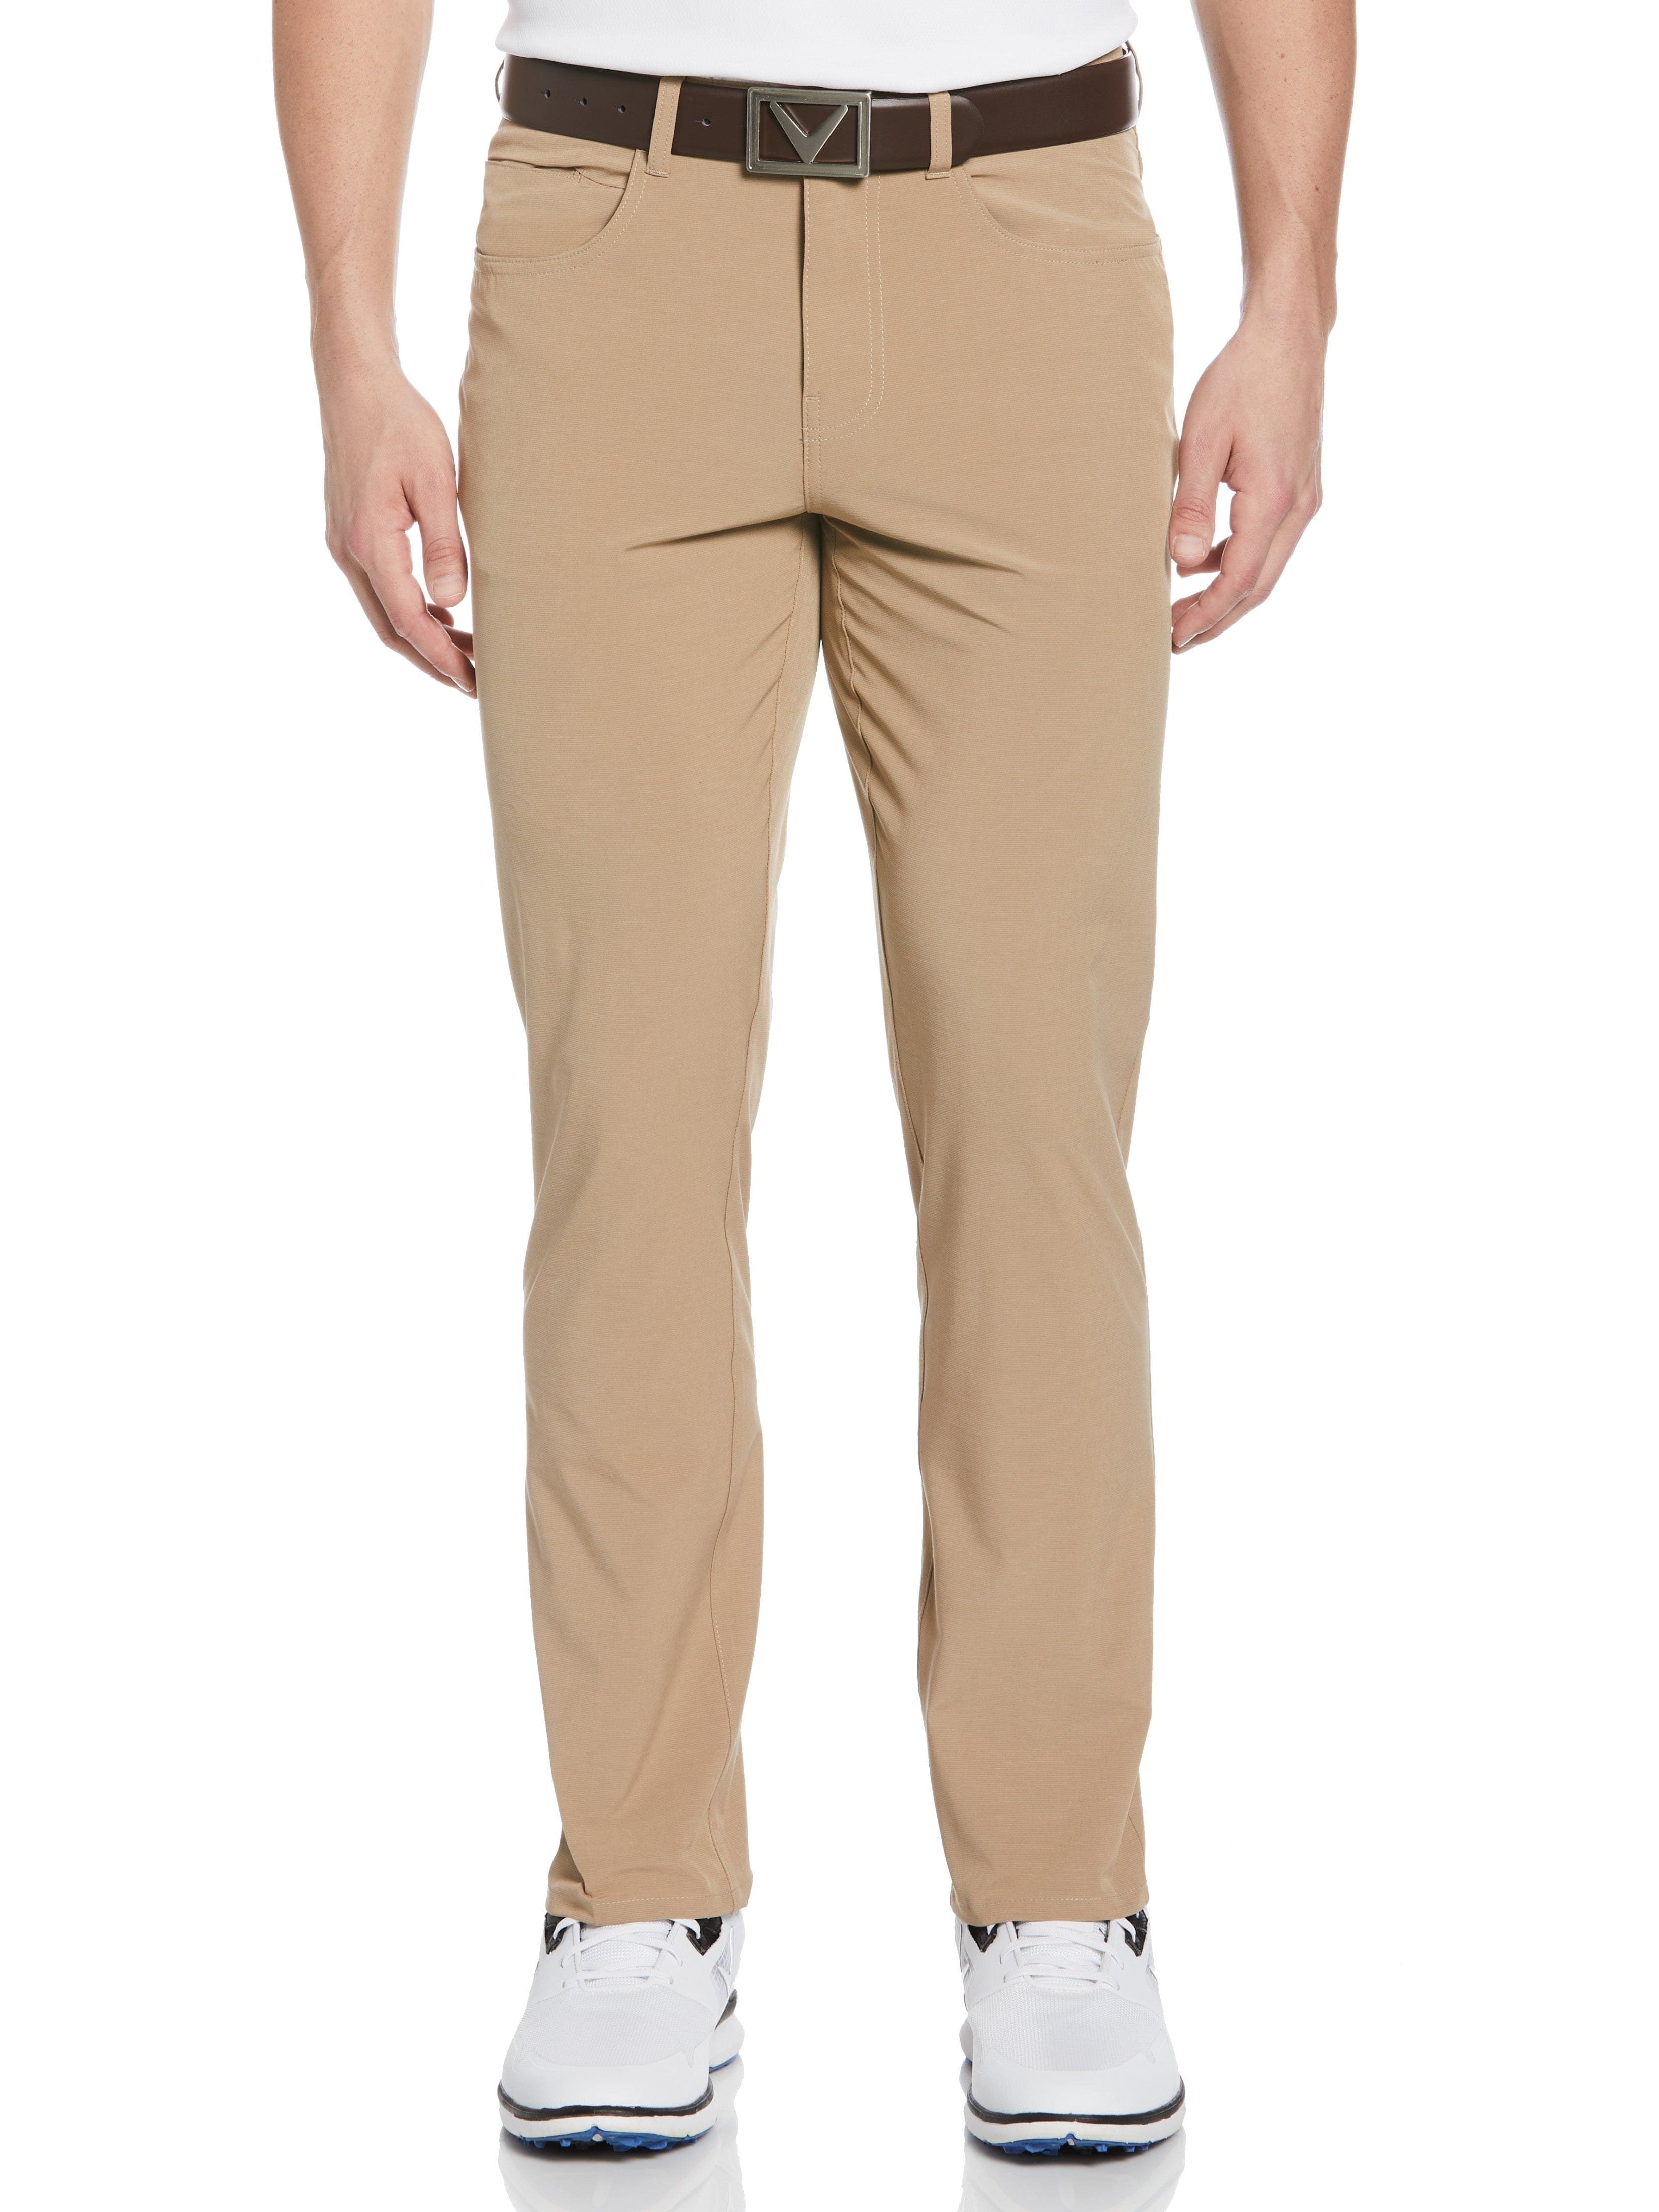 Navy 5 Pocket Performance Pants - Golf Attire For Men · johnnie-O